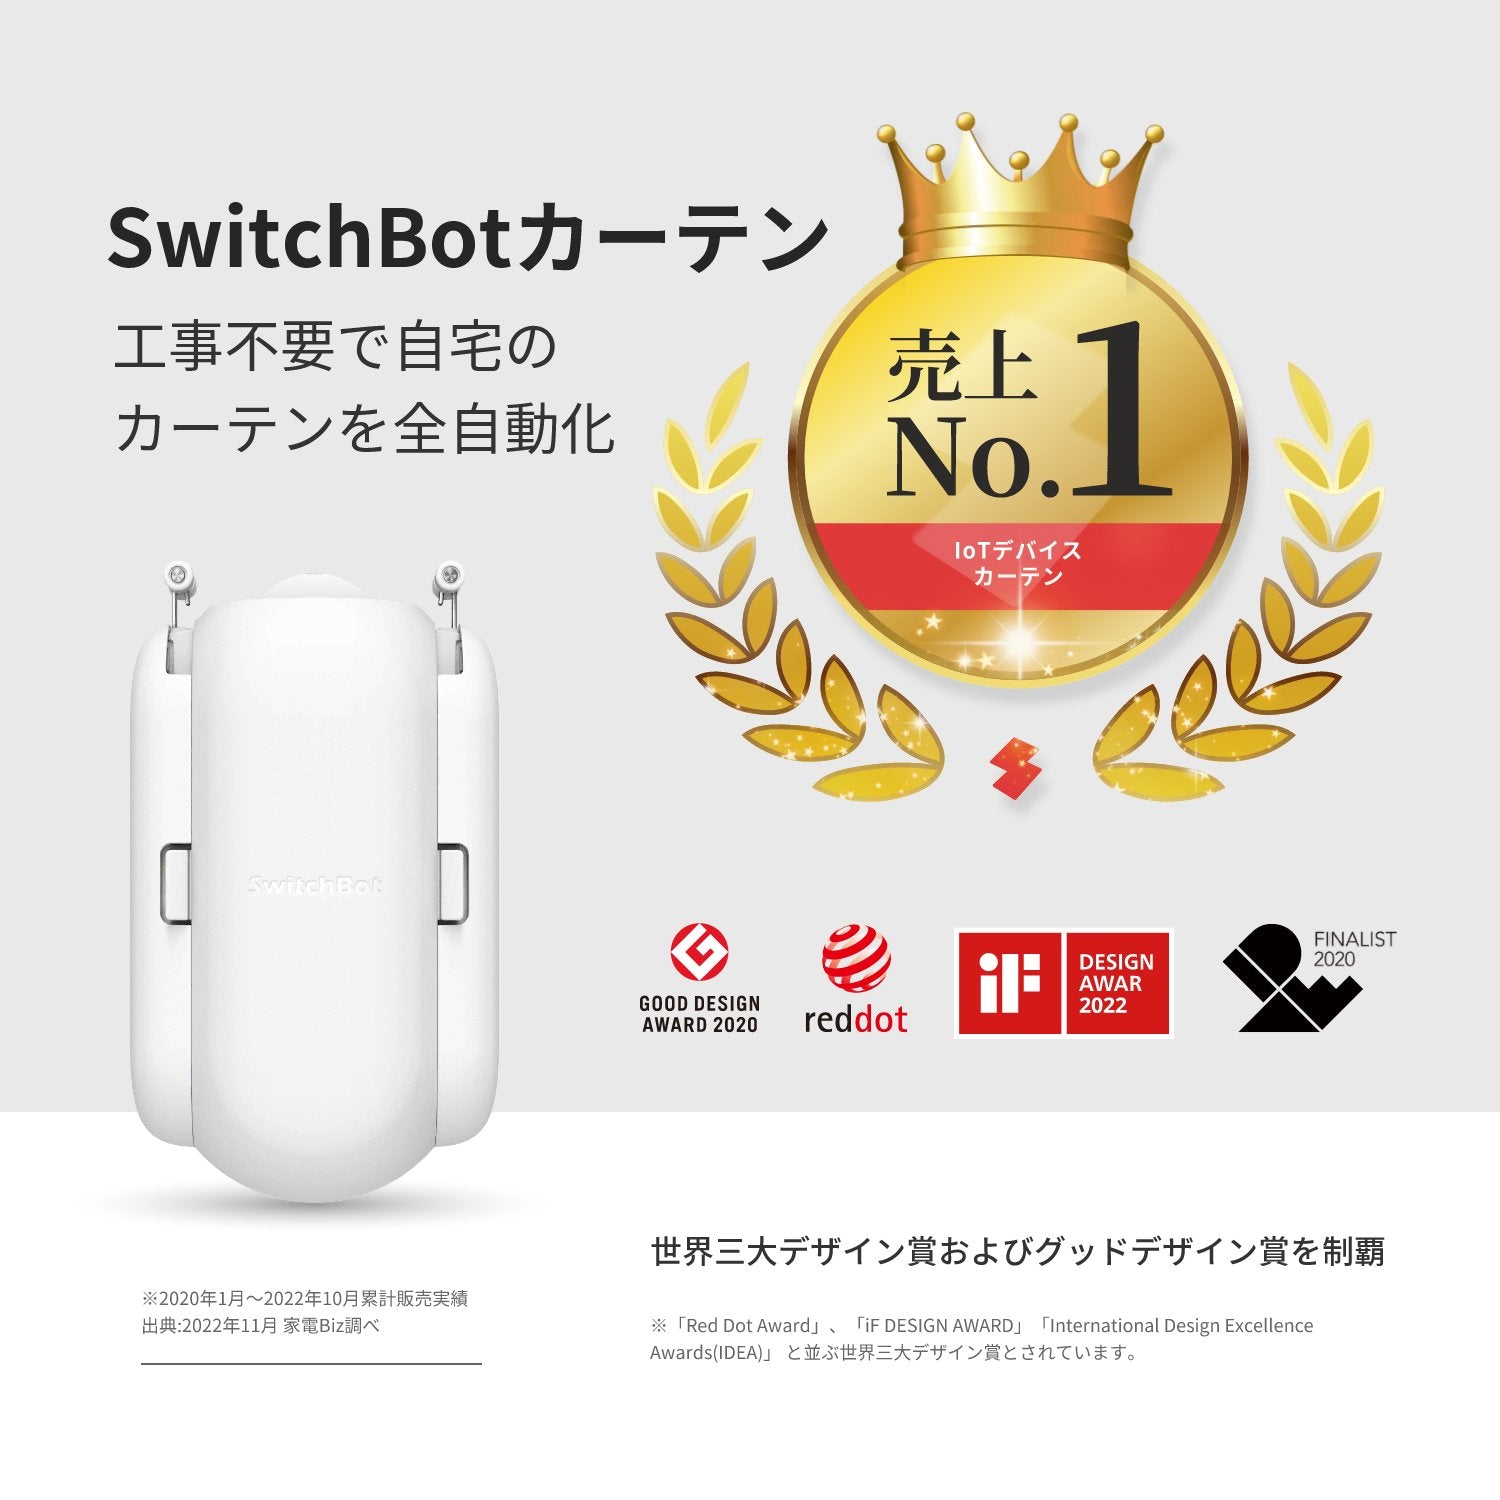 SwitchBot スマートカーテン｜日差しと共に気持ちよく目覚めよう – SwitchBot (スイッチボット)